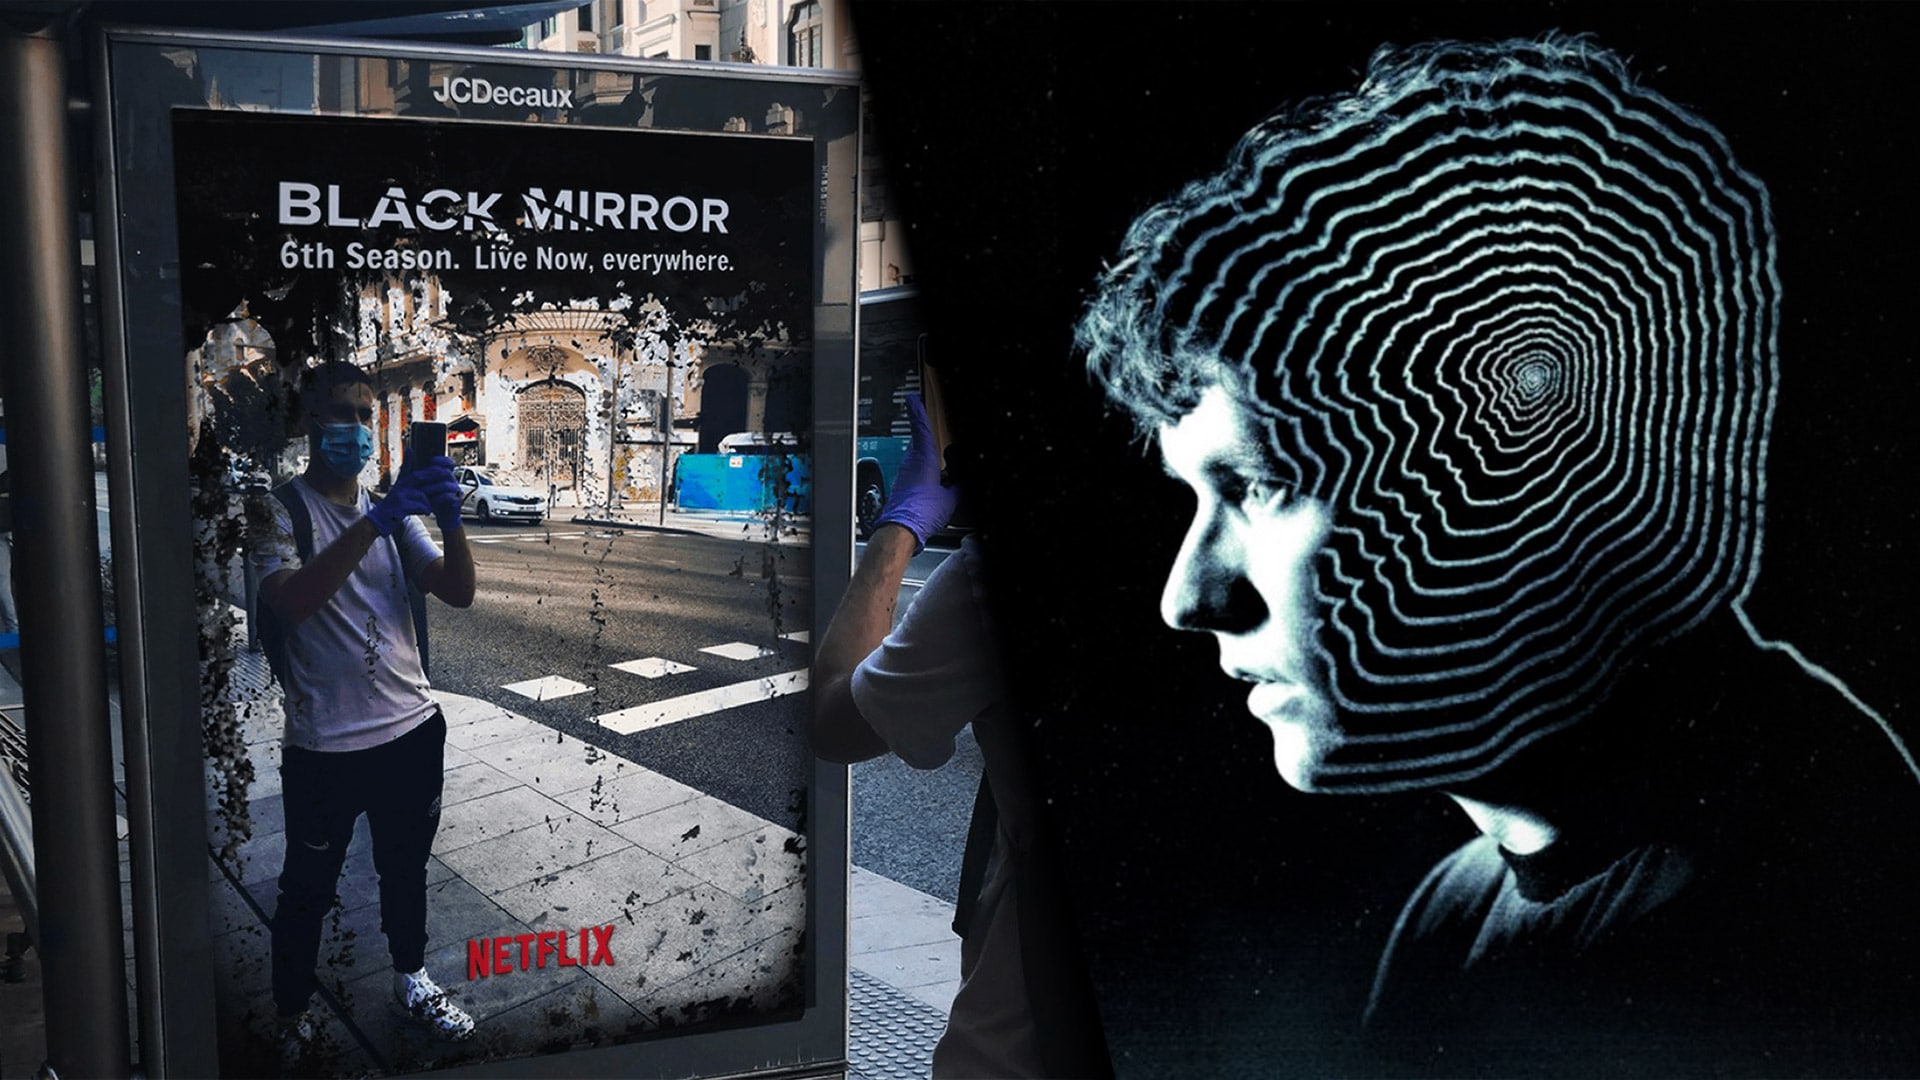 Will Netflix Come Back With Black Mirror Season 6?